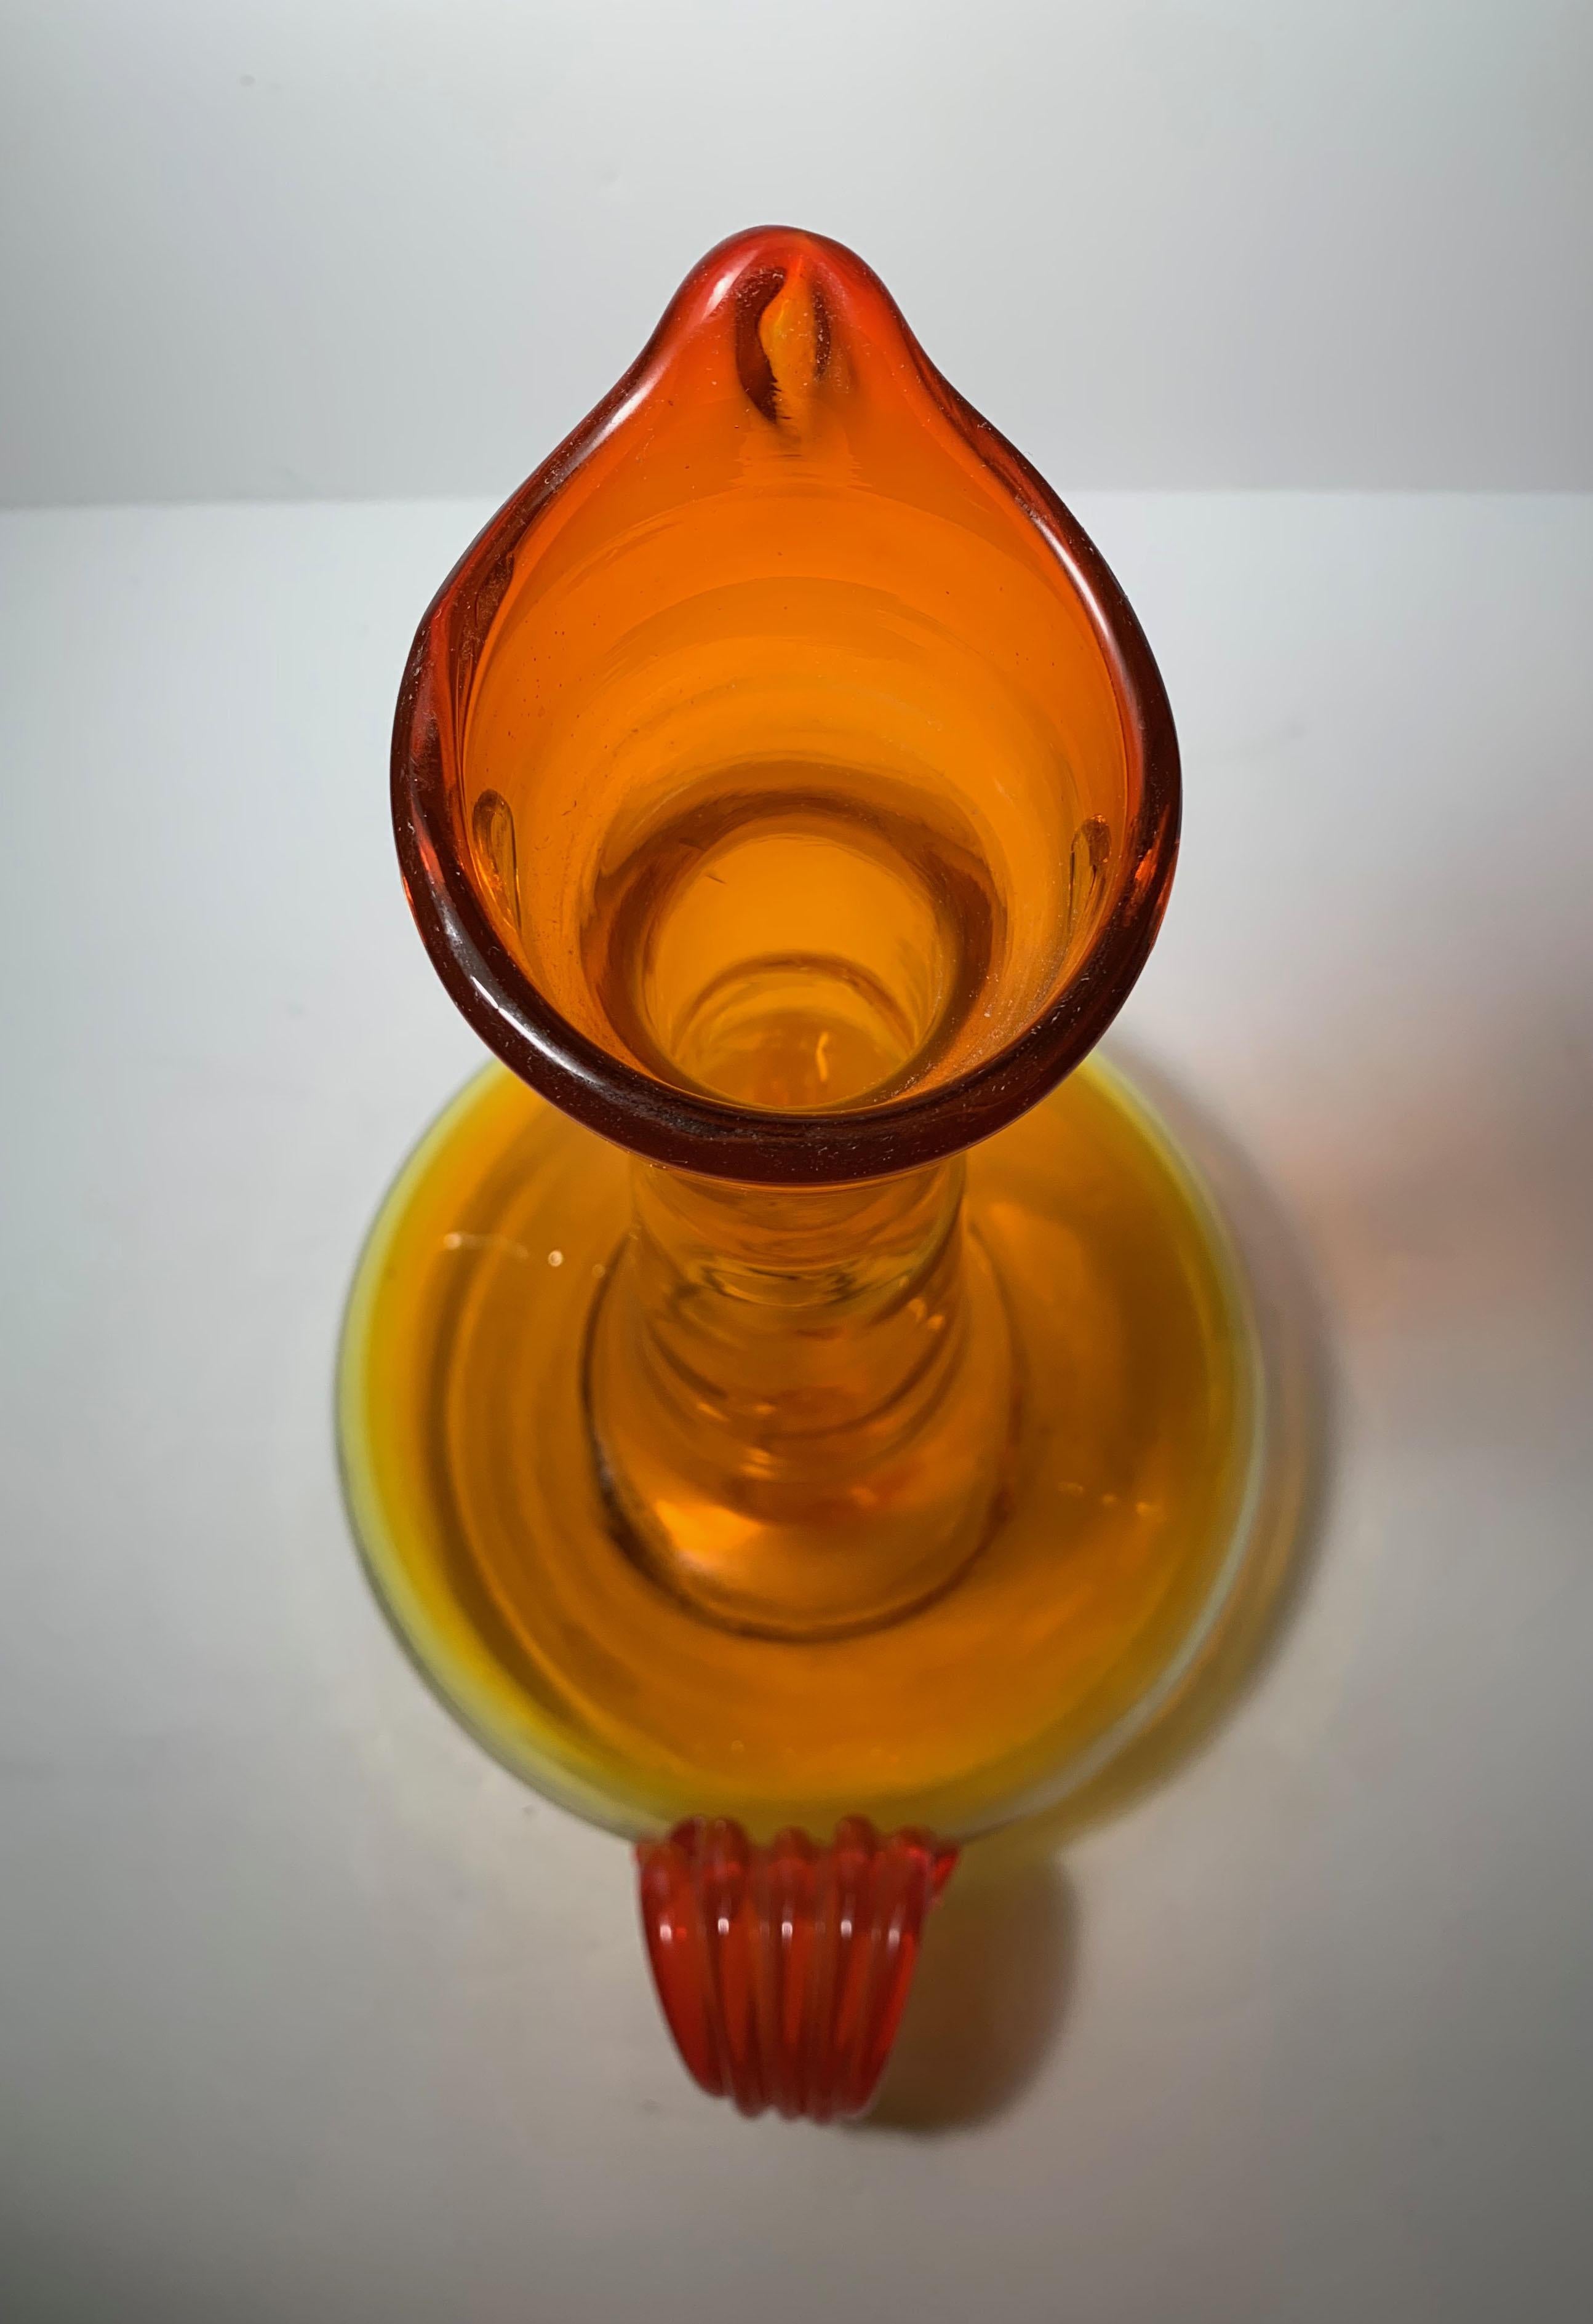 Mid-Century Modern Rare Blenko 5410 Bird or Rooster Vase by Wayne Husted in Tangerine